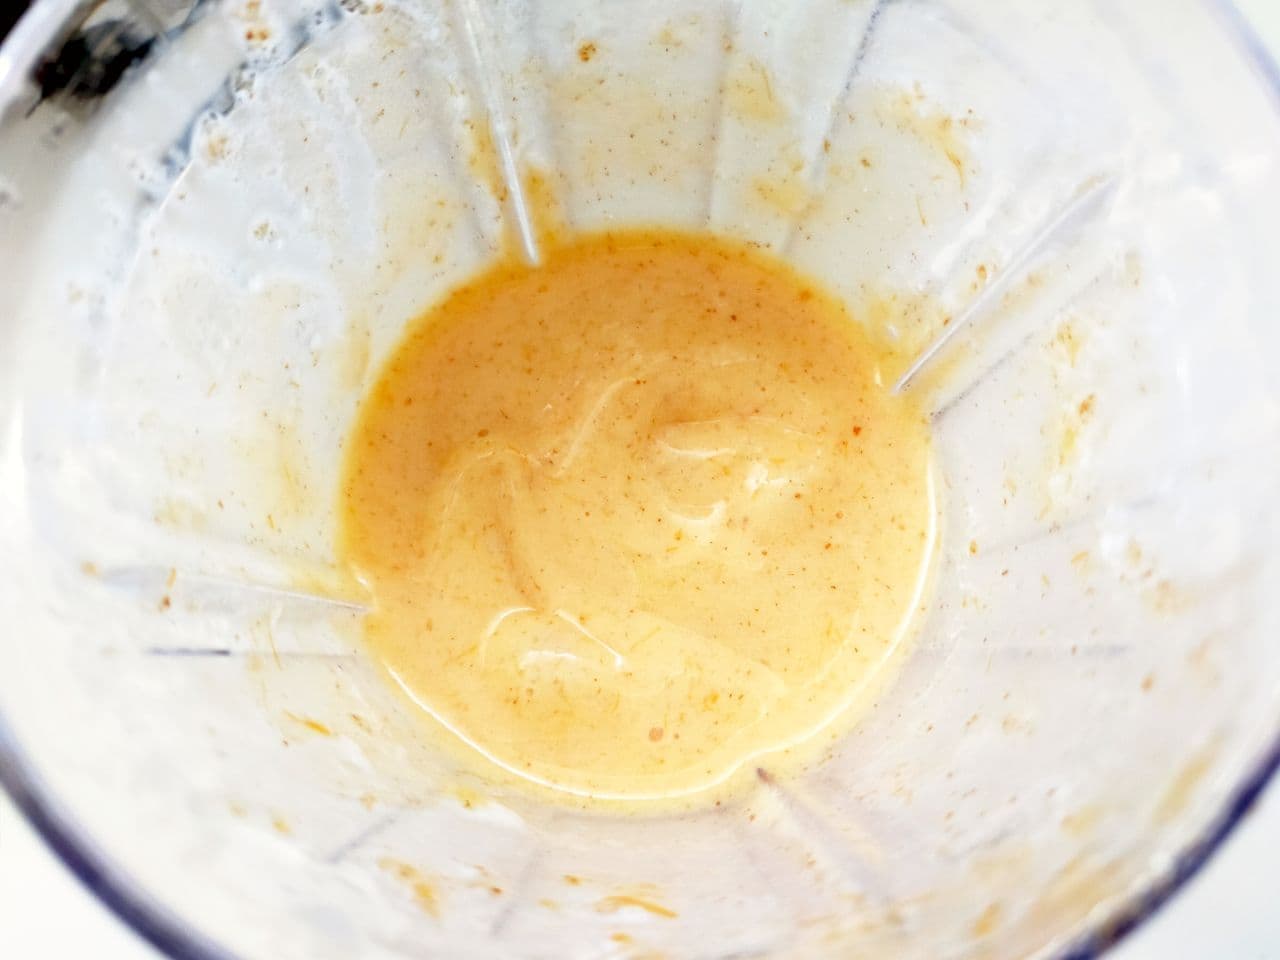 Recipe for super tasty "persimmon pudding" using overripe persimmons